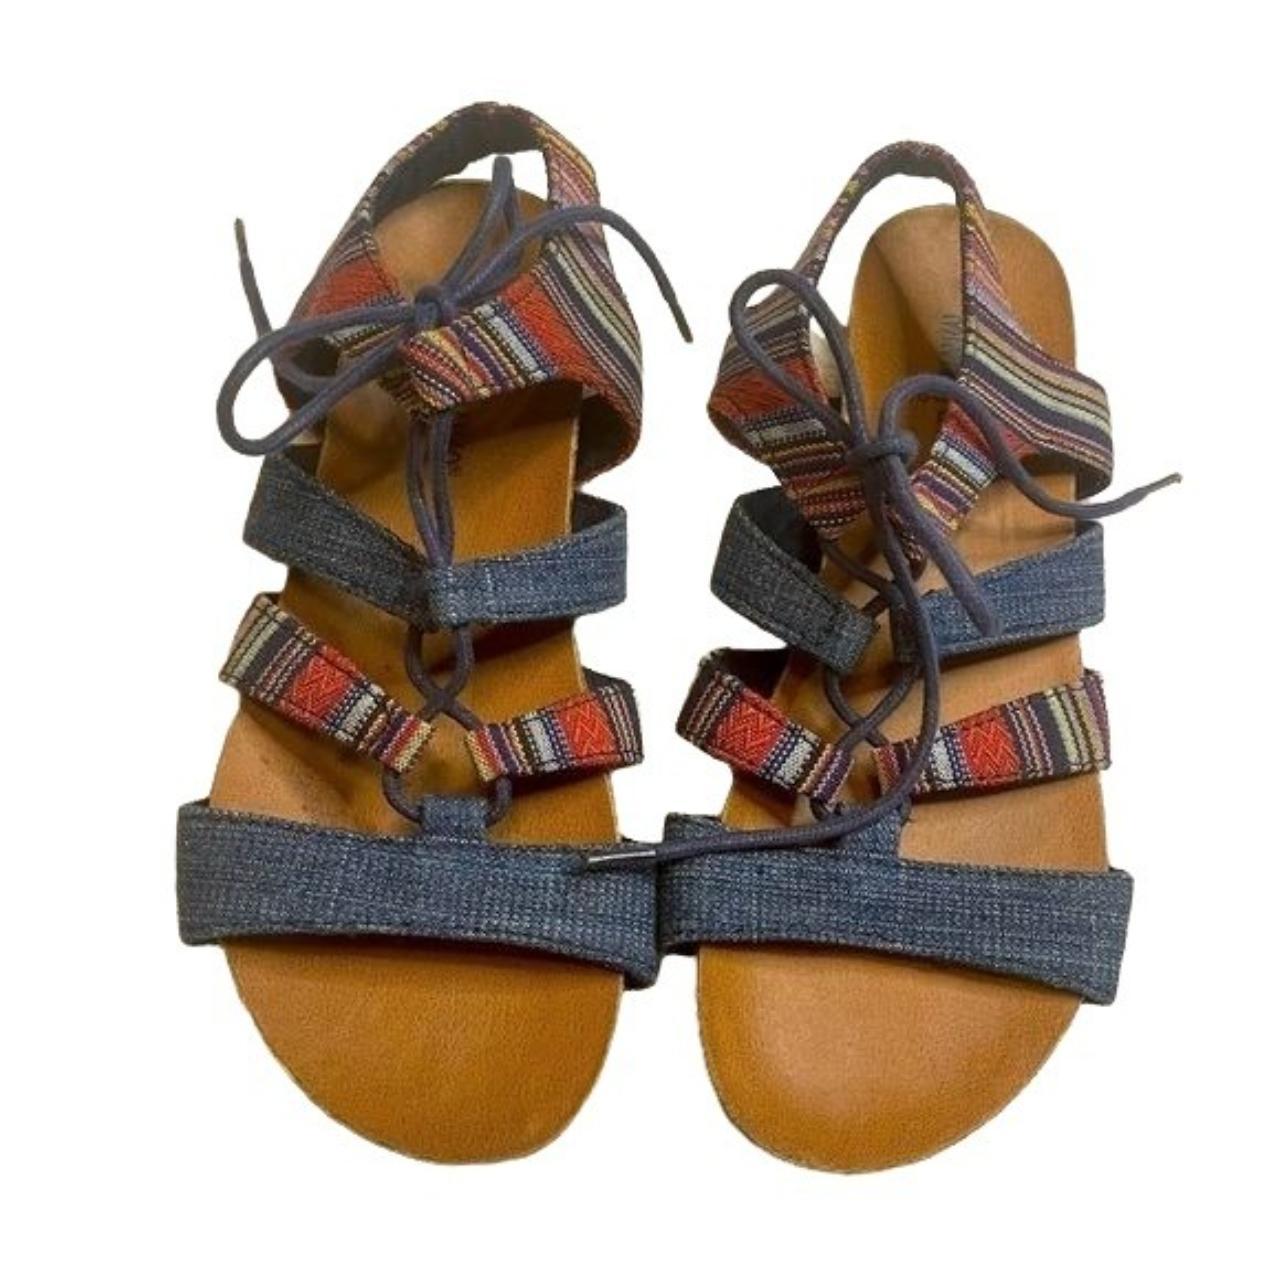 Product Image 1 - VGUC
Minnetonka
Effie Gladiator Sandals
Size 7
Denim and